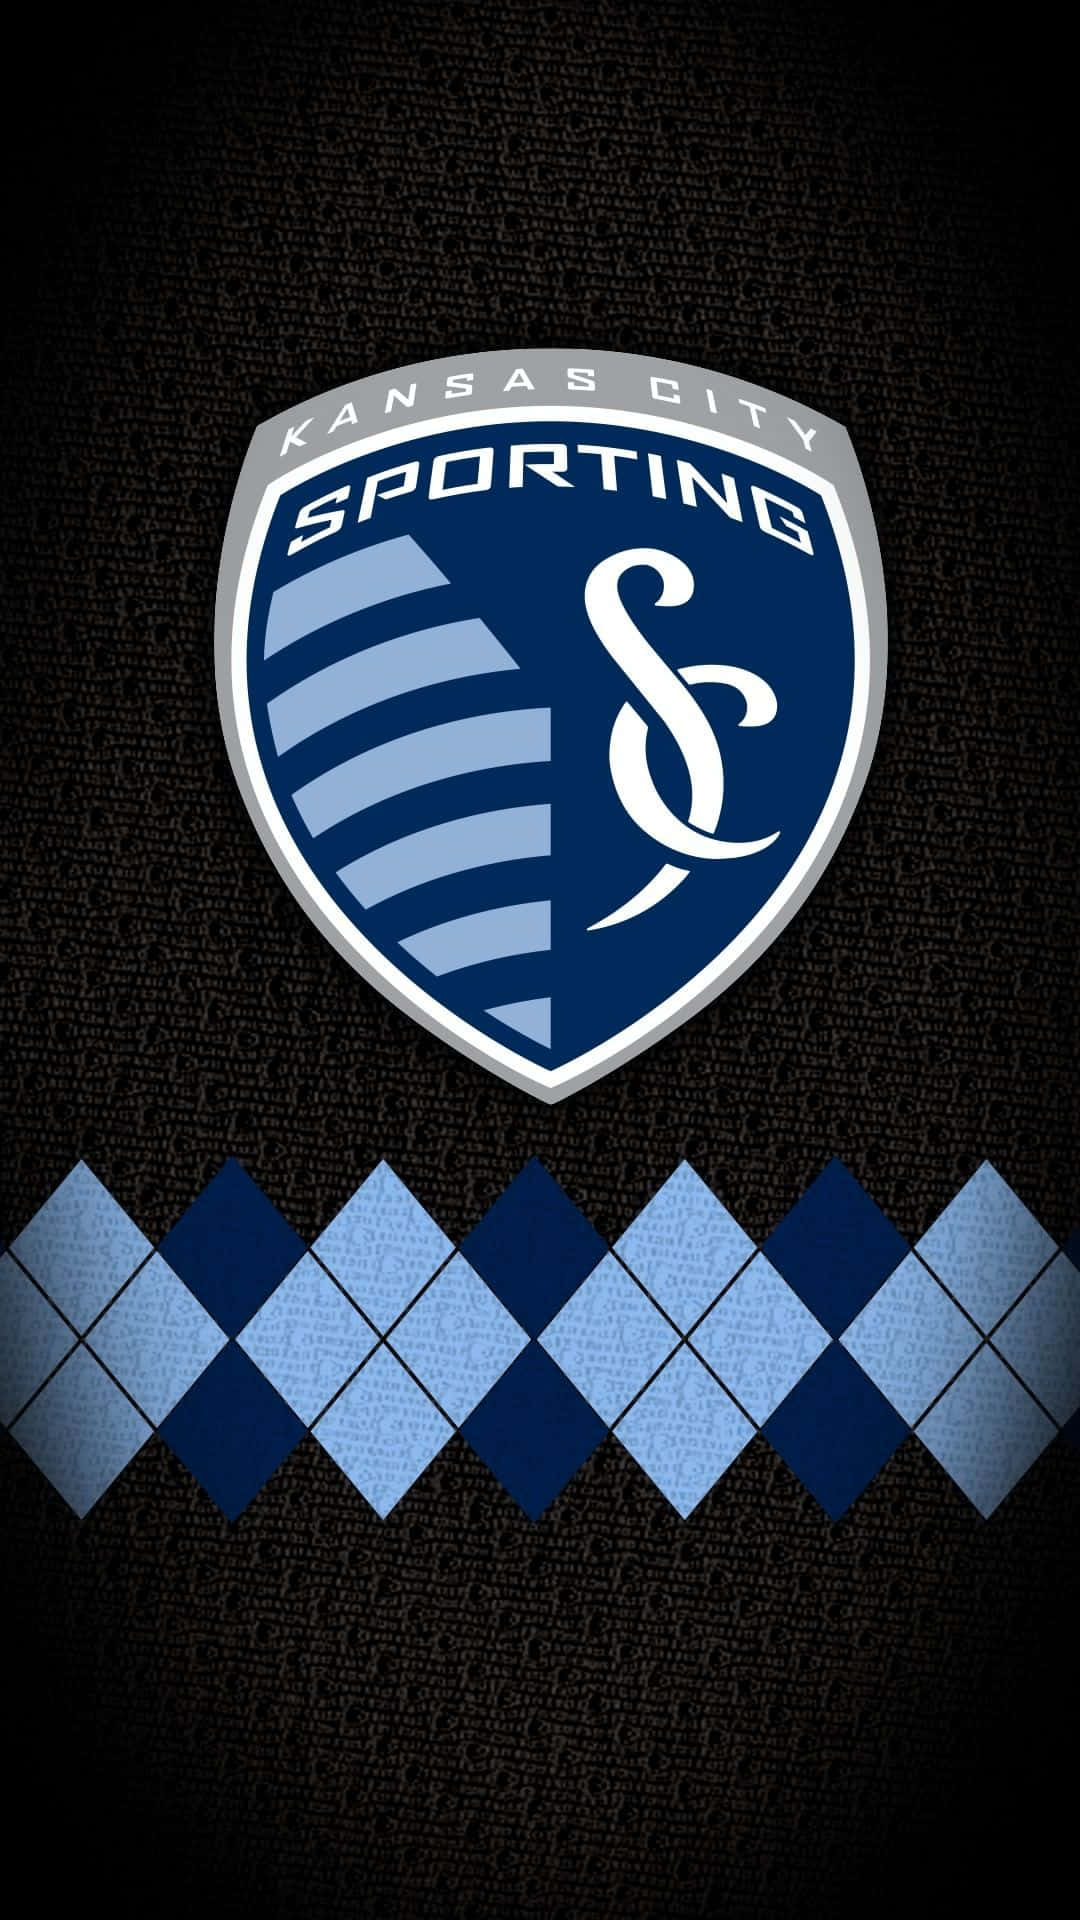 Sporting Kansas City Logo With Argyle Pattern Wallpaper